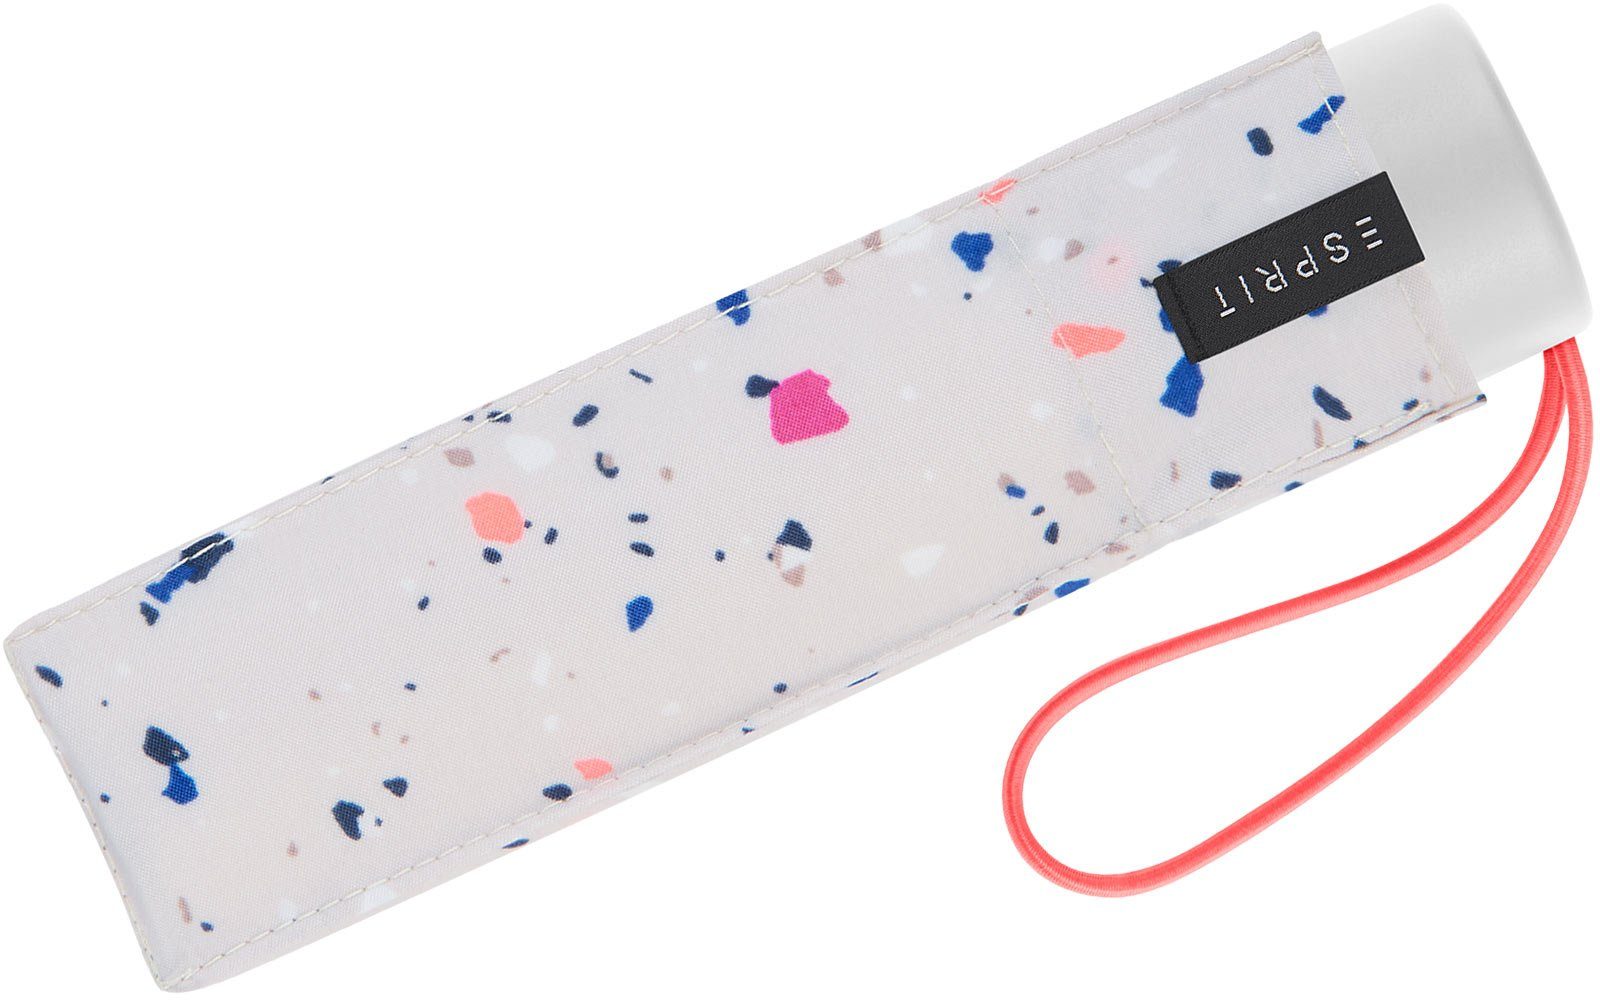 Mini klein, - Terrazzo Taschenregenschirm in Petito Esprit Regenschirm neuen winzig den - Dots weiß, Trendfarben